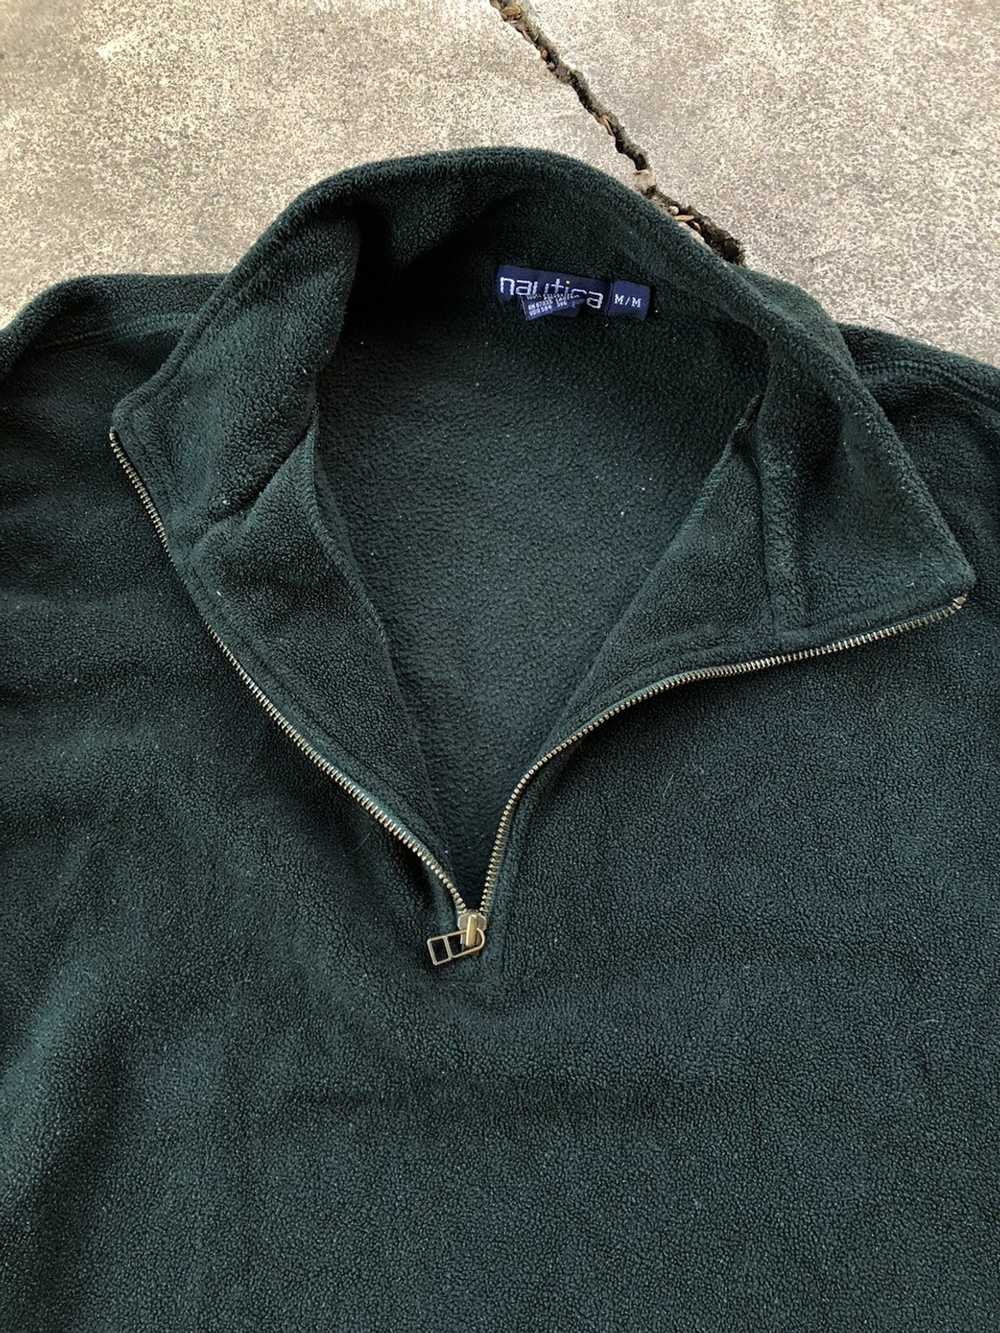 Nautica × Vintage Nautica Fleece Pullover Sweatsh… - image 3